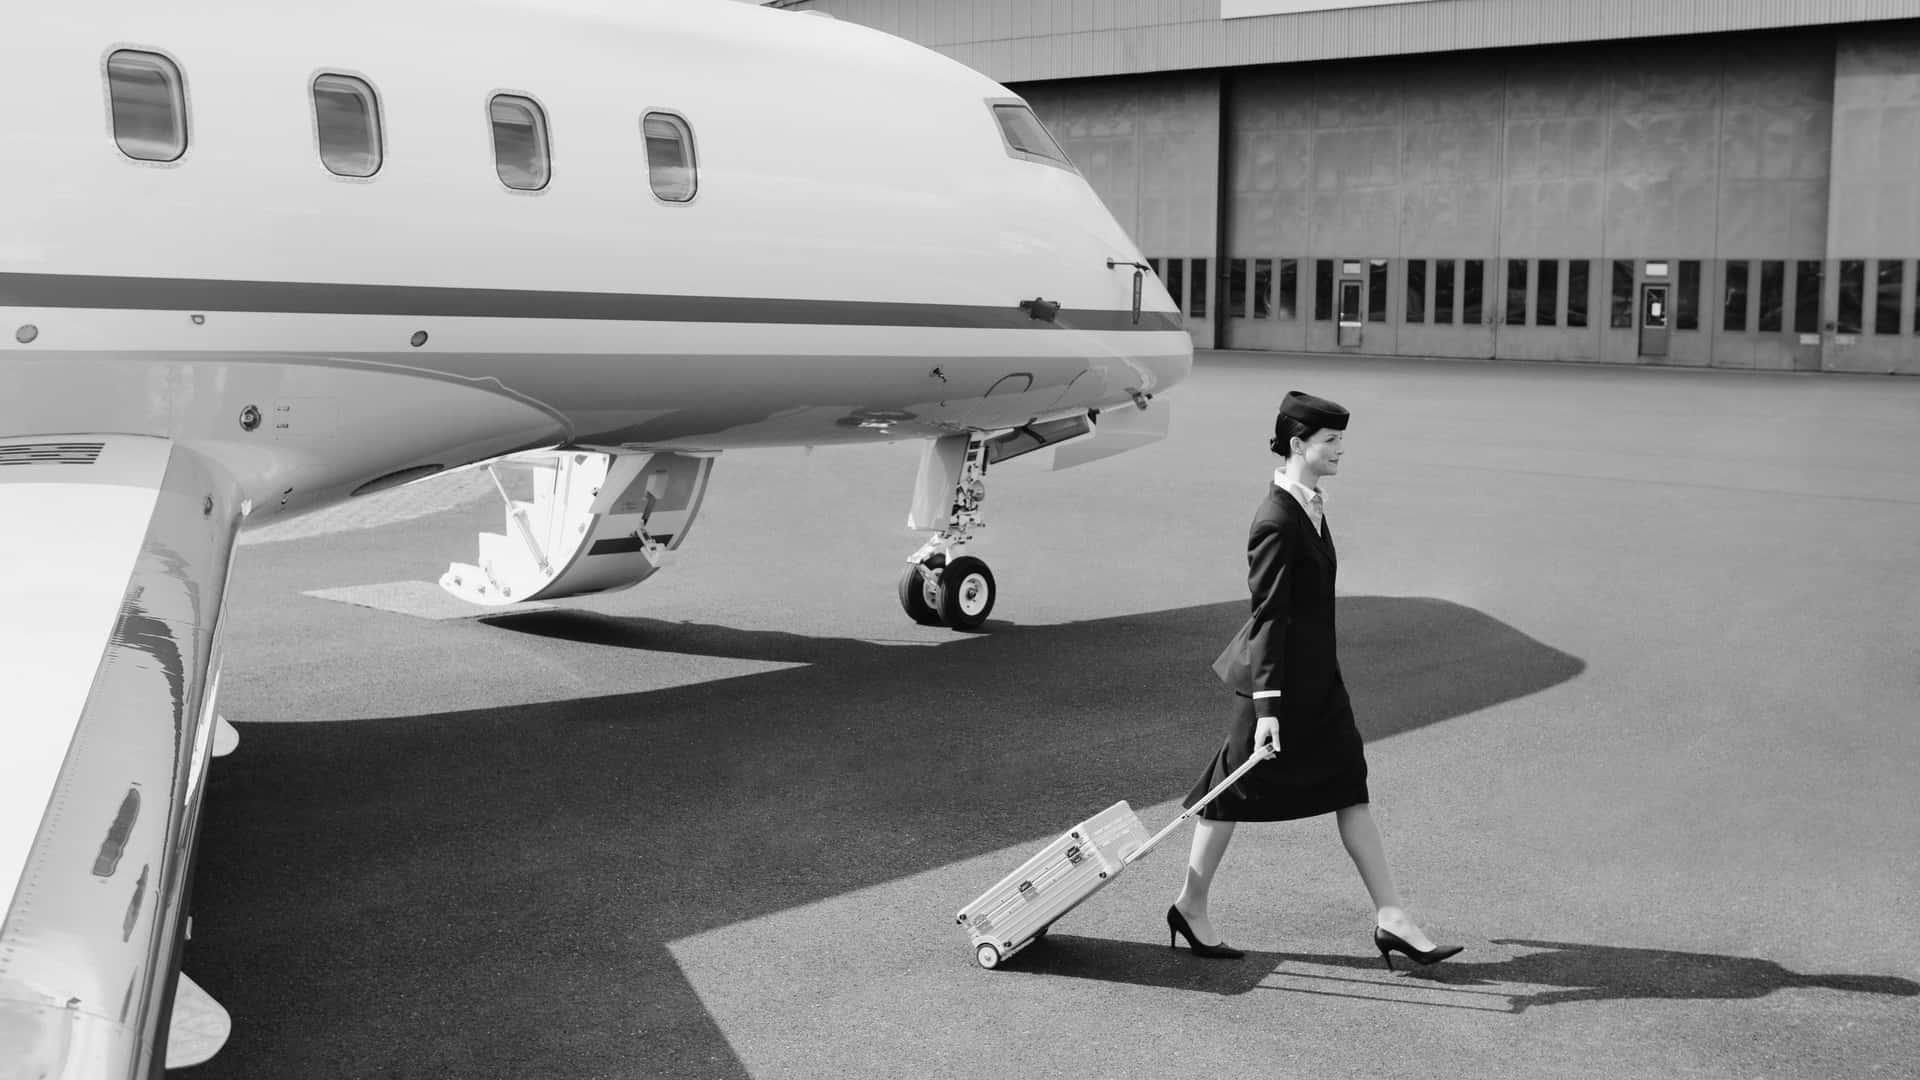 A stylish flight attendant wearing a uniform walking down the aisle.